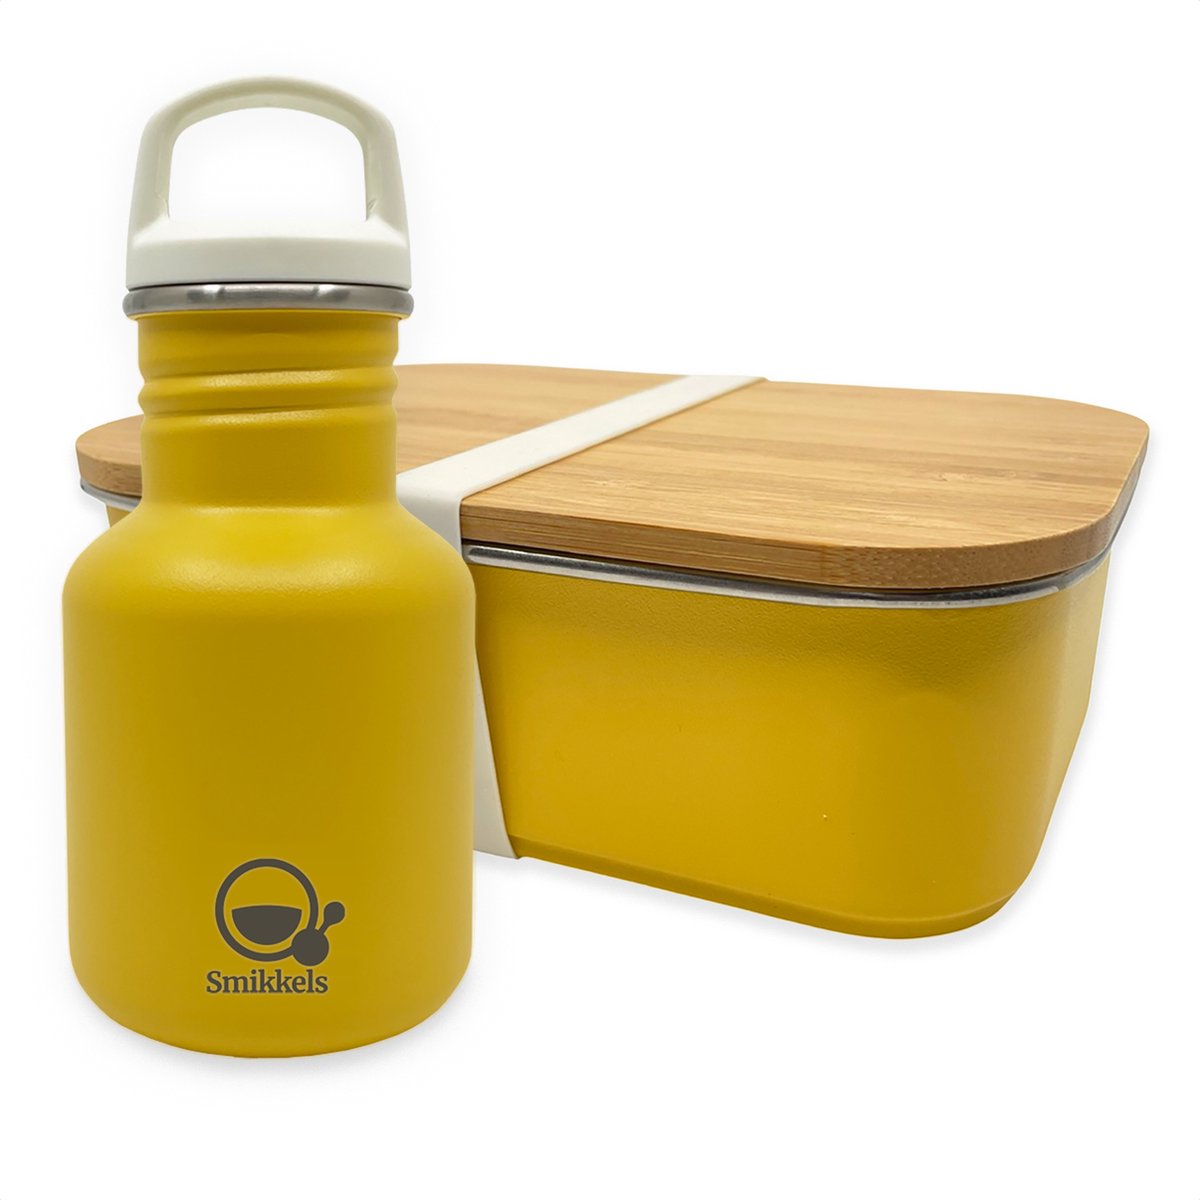 Smikkels - Schoolset RVS lunchbox met drinkfles kind - Geel - Duurzaam - Afsluitdop en rietjesdop - Lunchset Broodtrommel en Schoolbeker - Basisschool